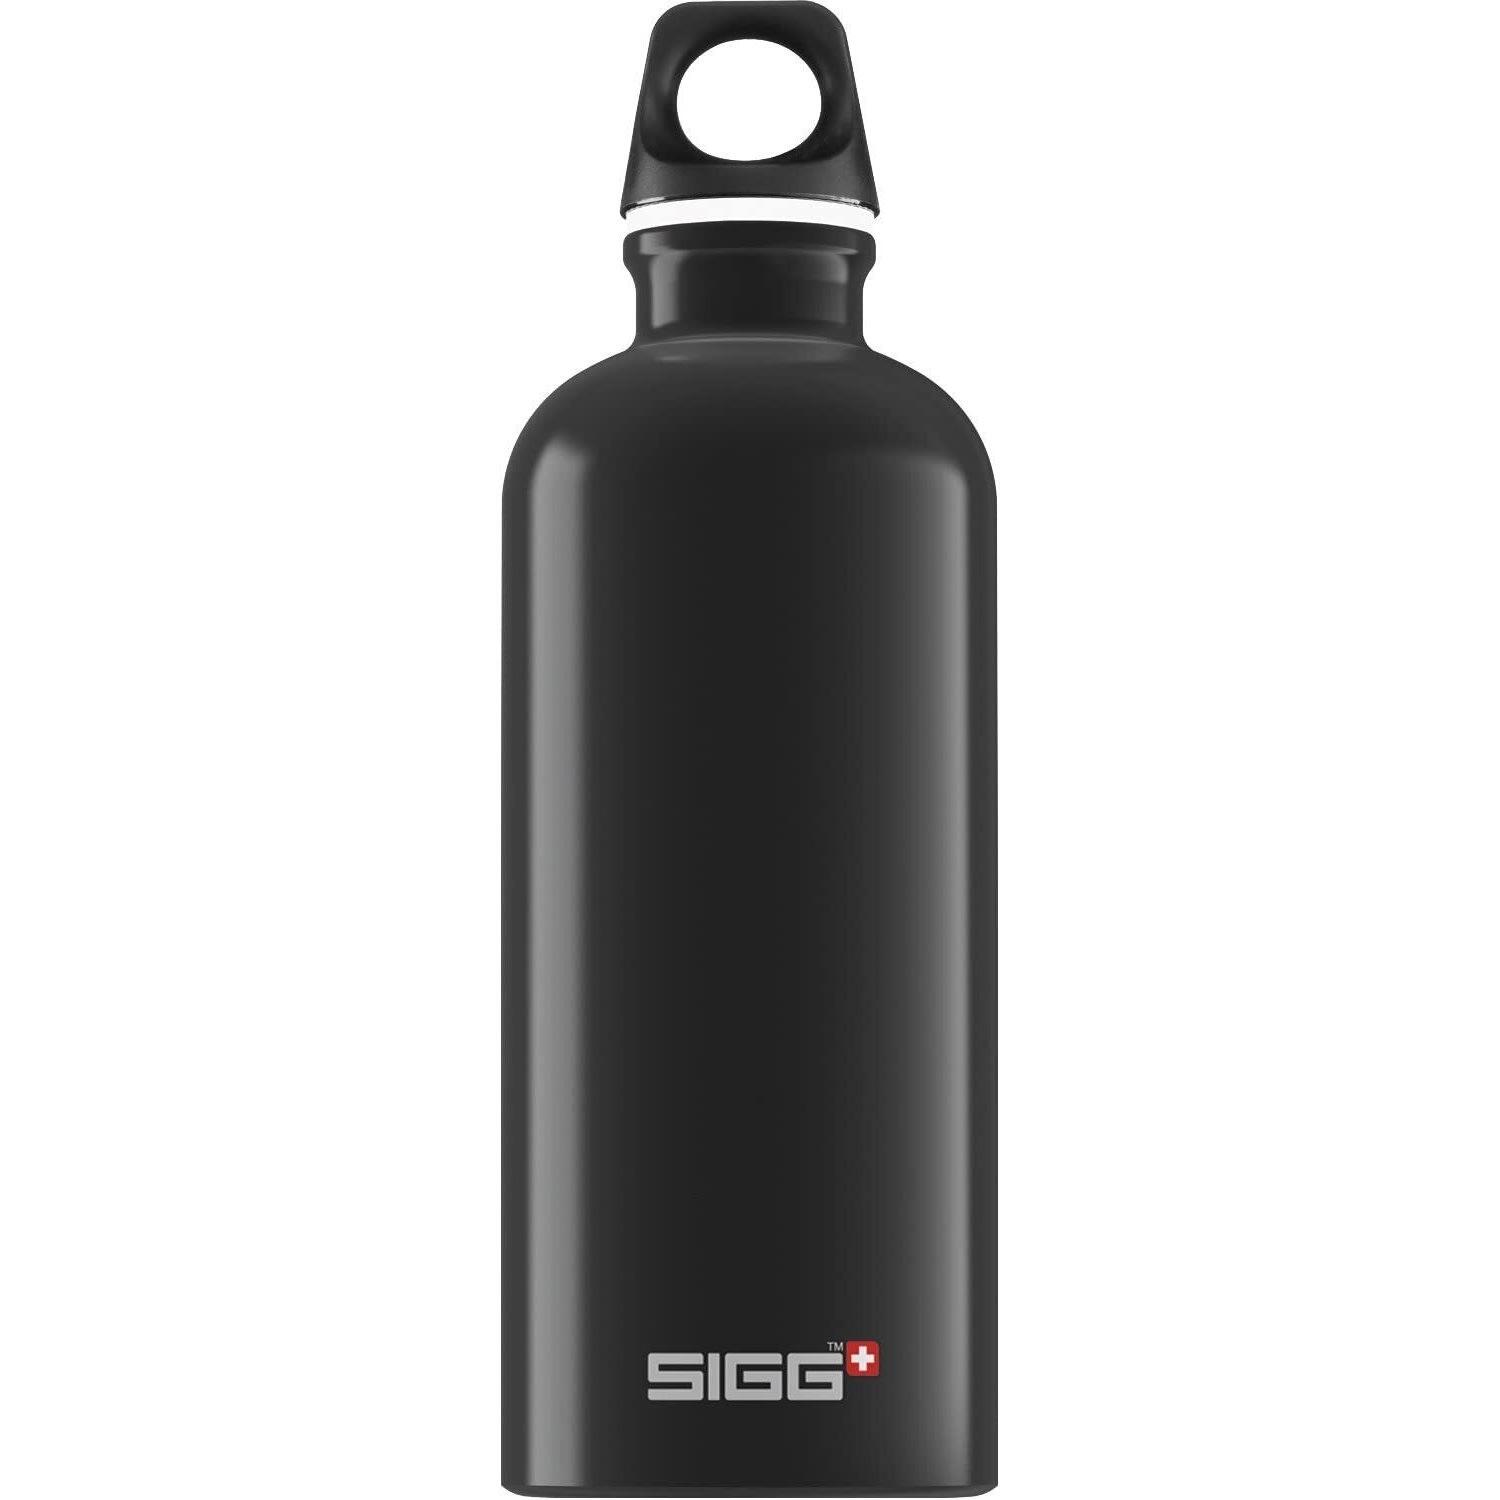 SIGG Travel Water Bottle (Black)